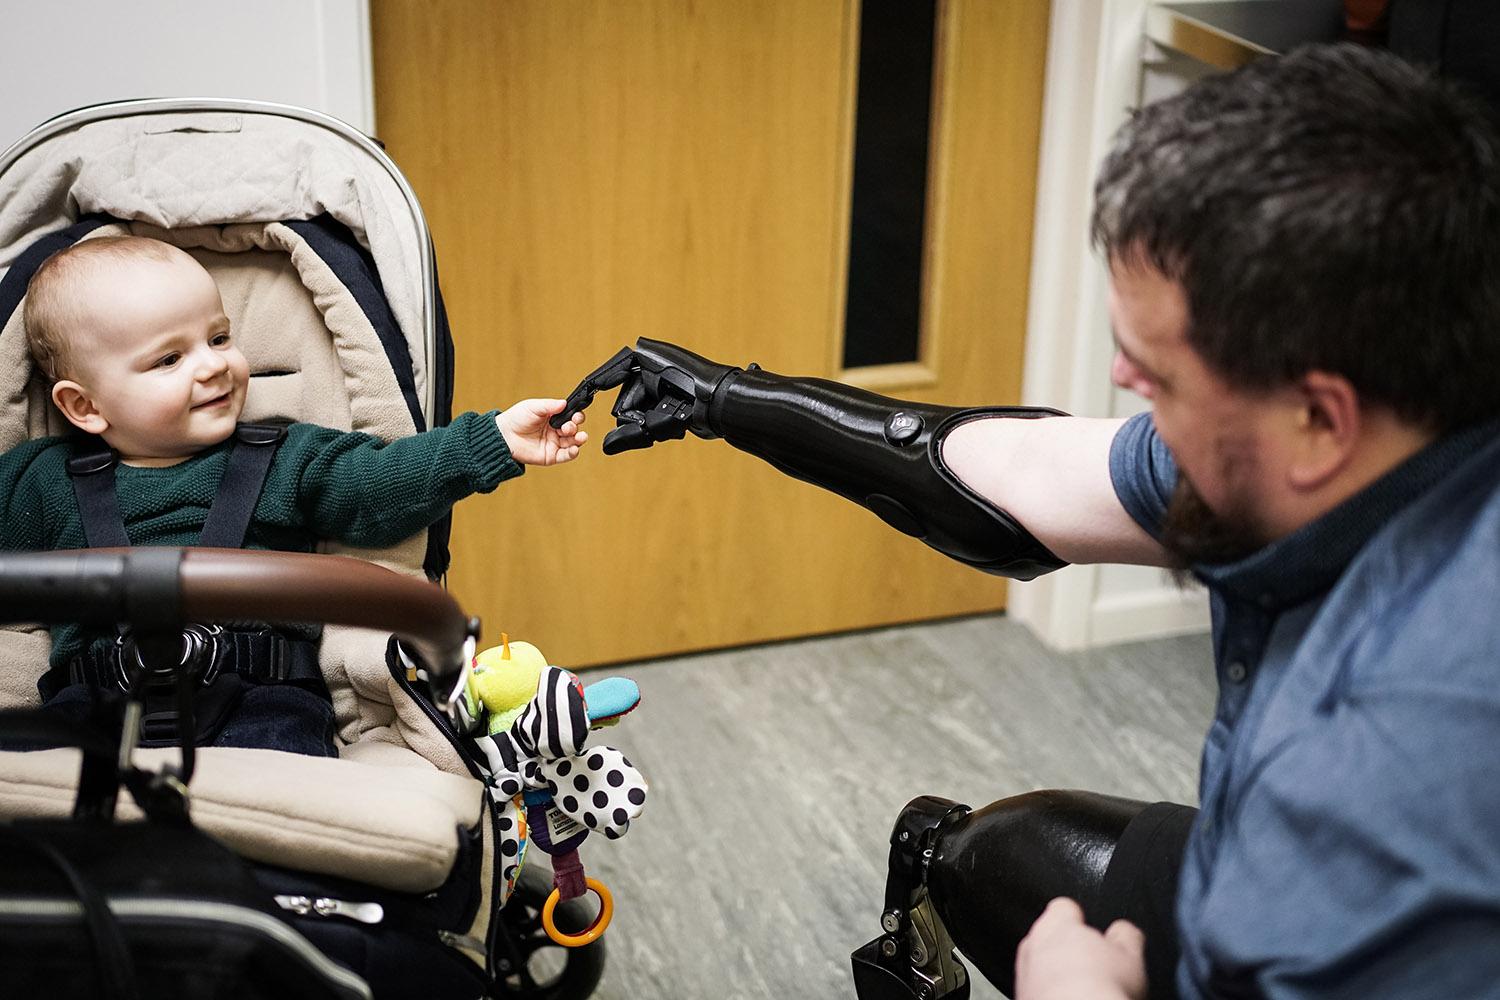 Danny gets his bionic hand